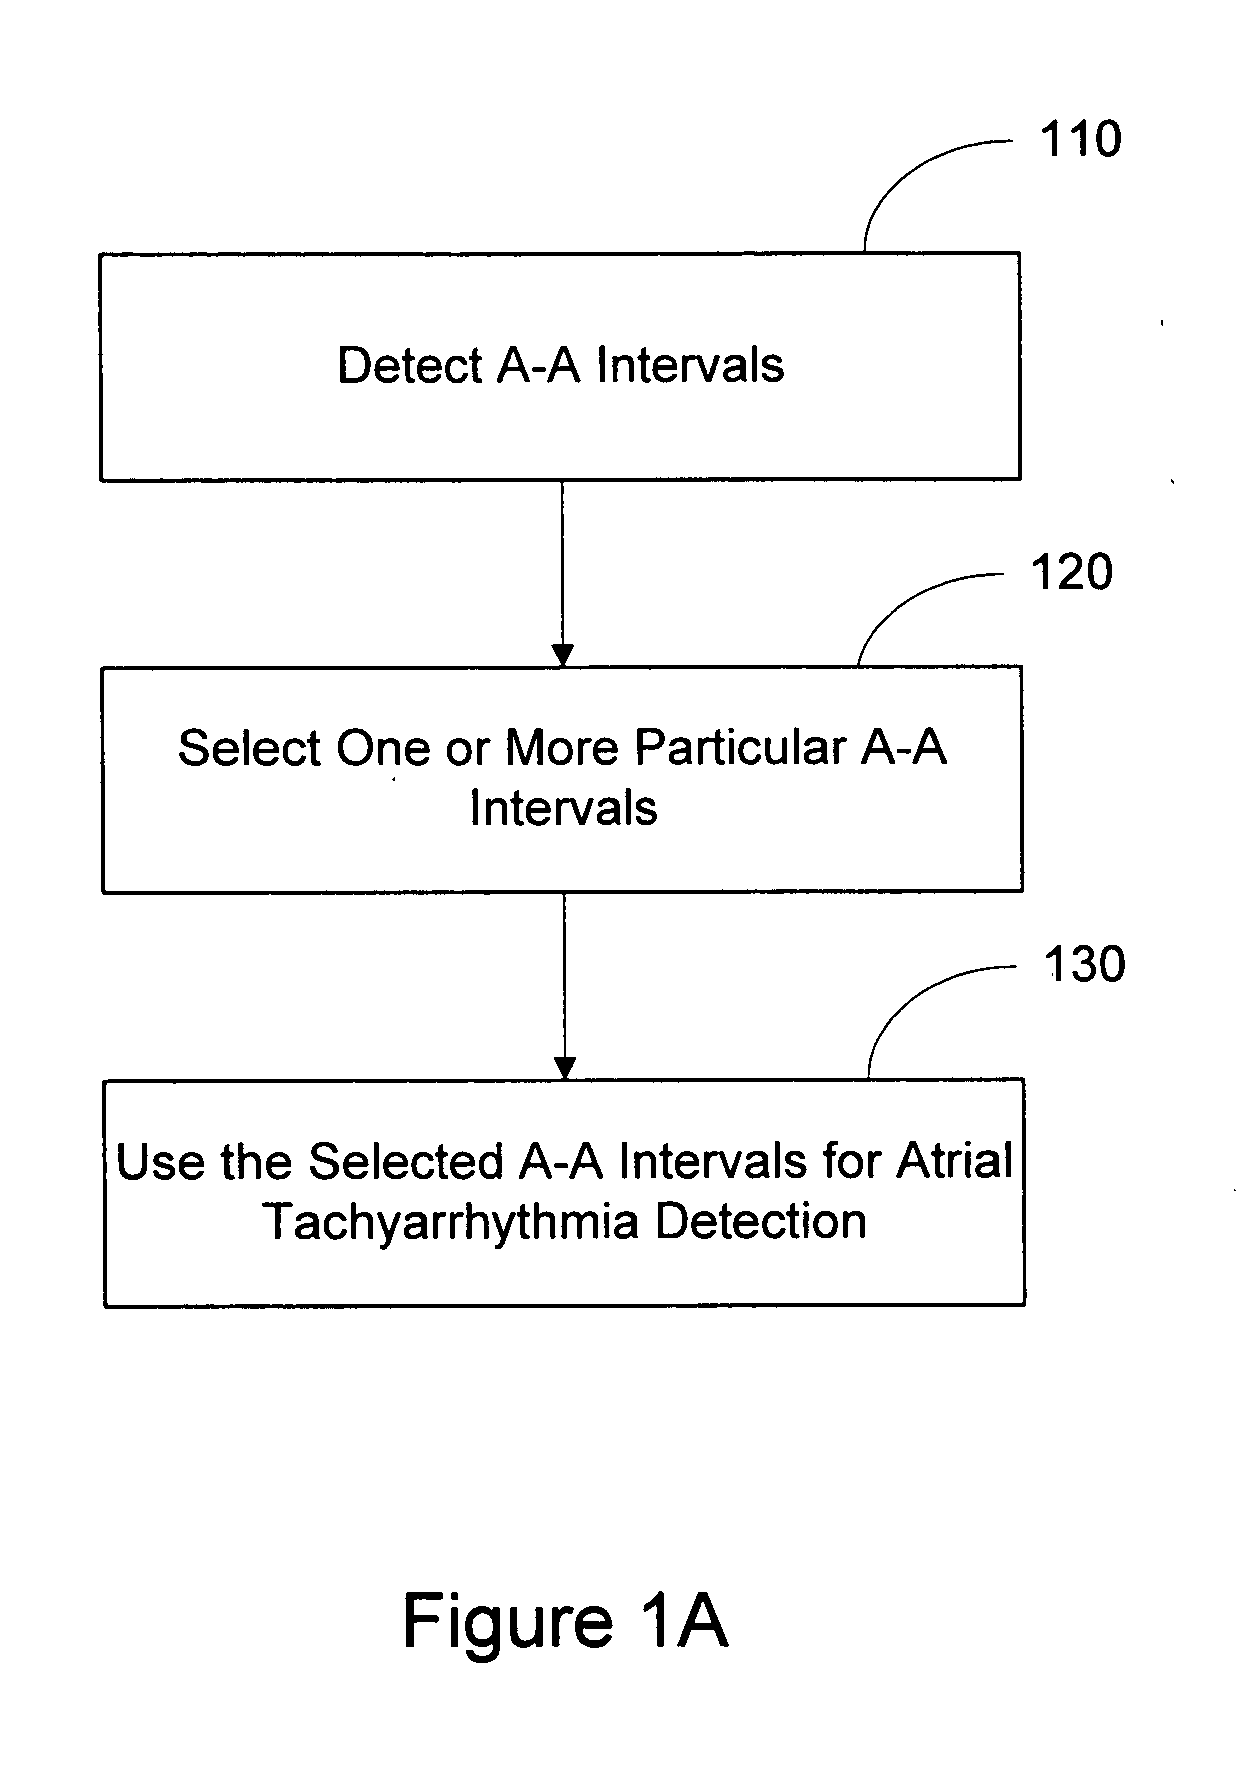 Atrial tachyarrhythmia detection using selected atrial intervals